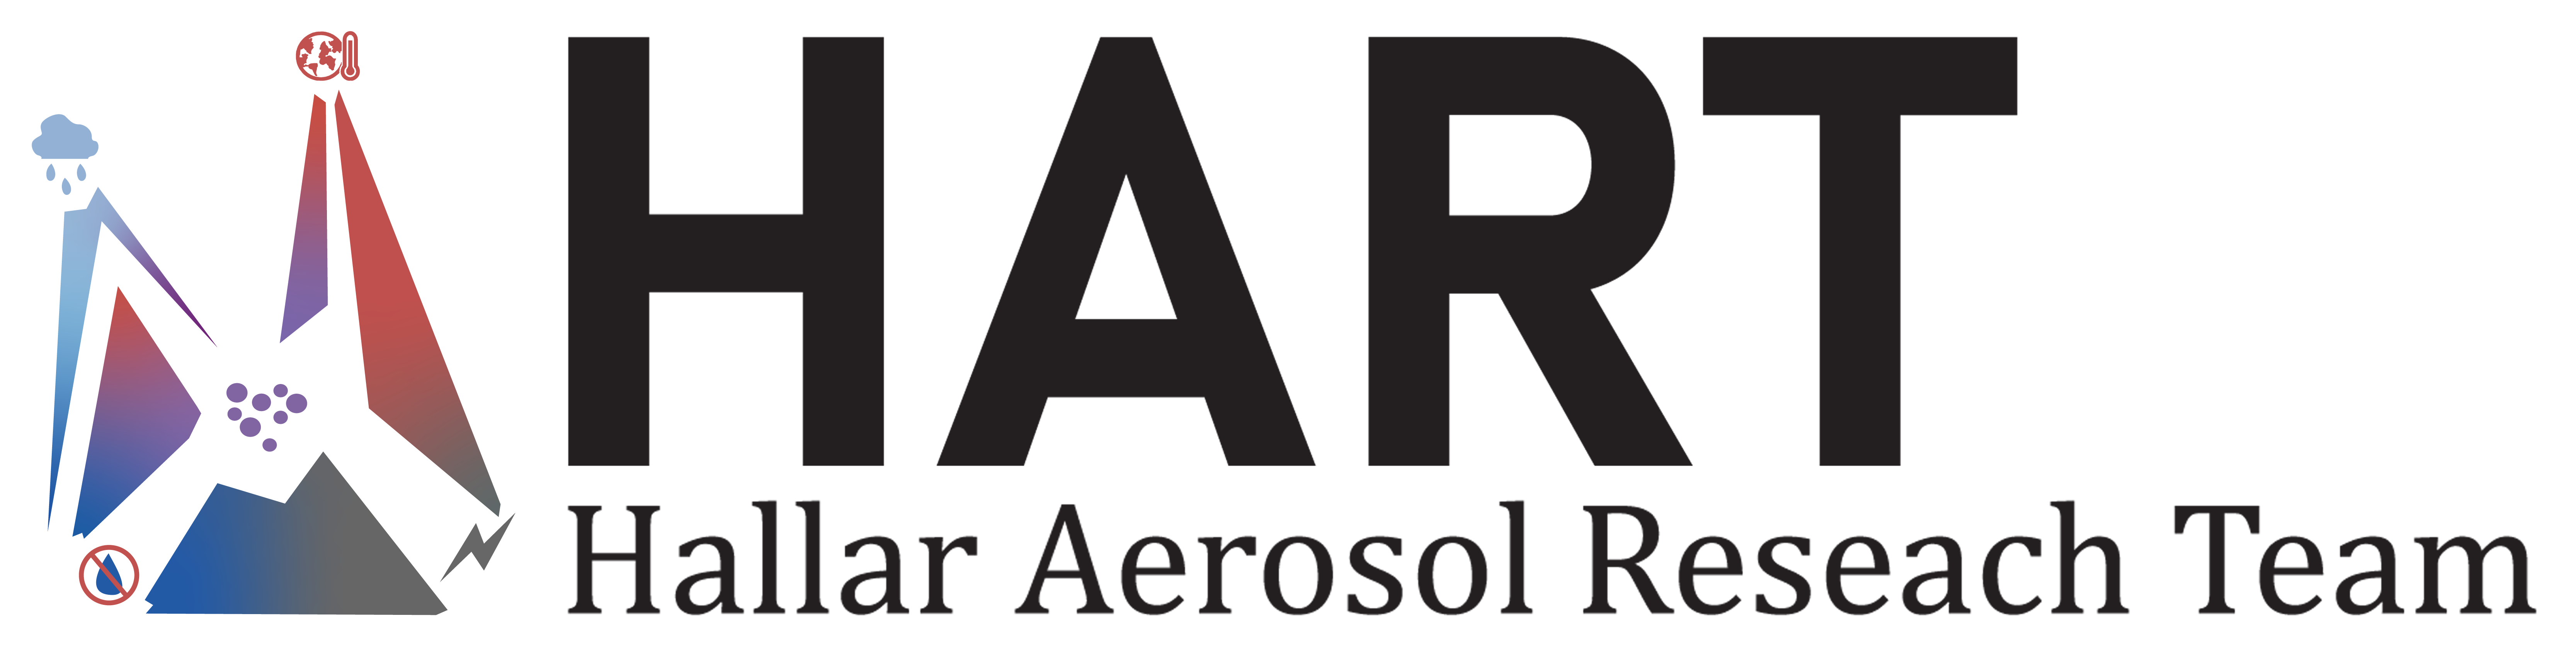 hart logo horizontal